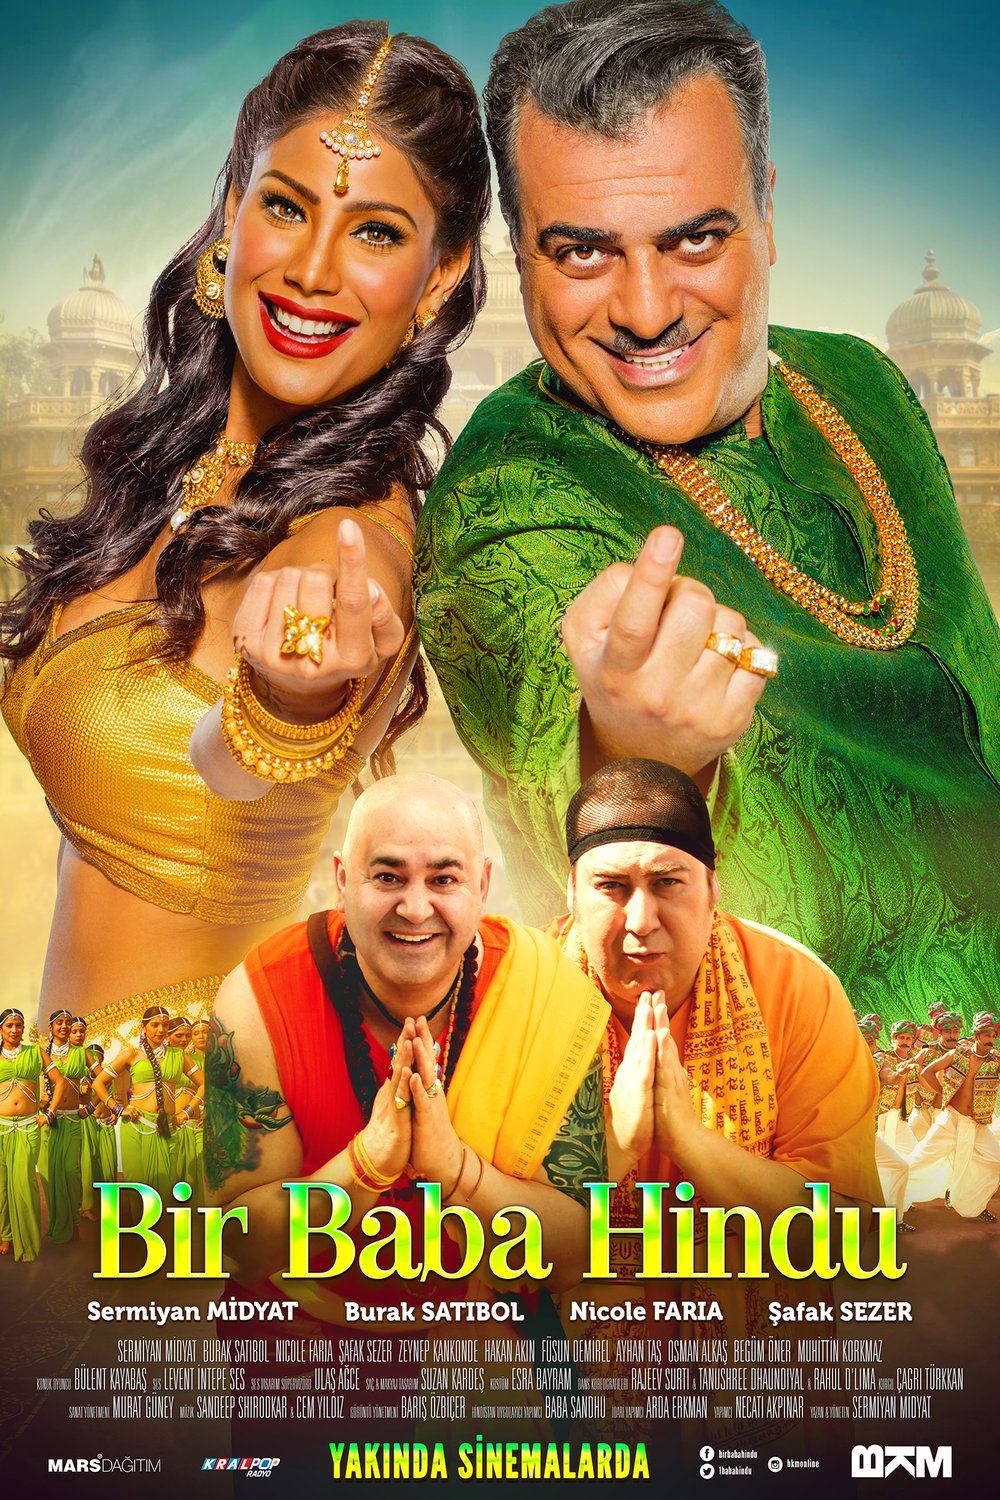 Turkish poster of the movie Bir Baba Hindu